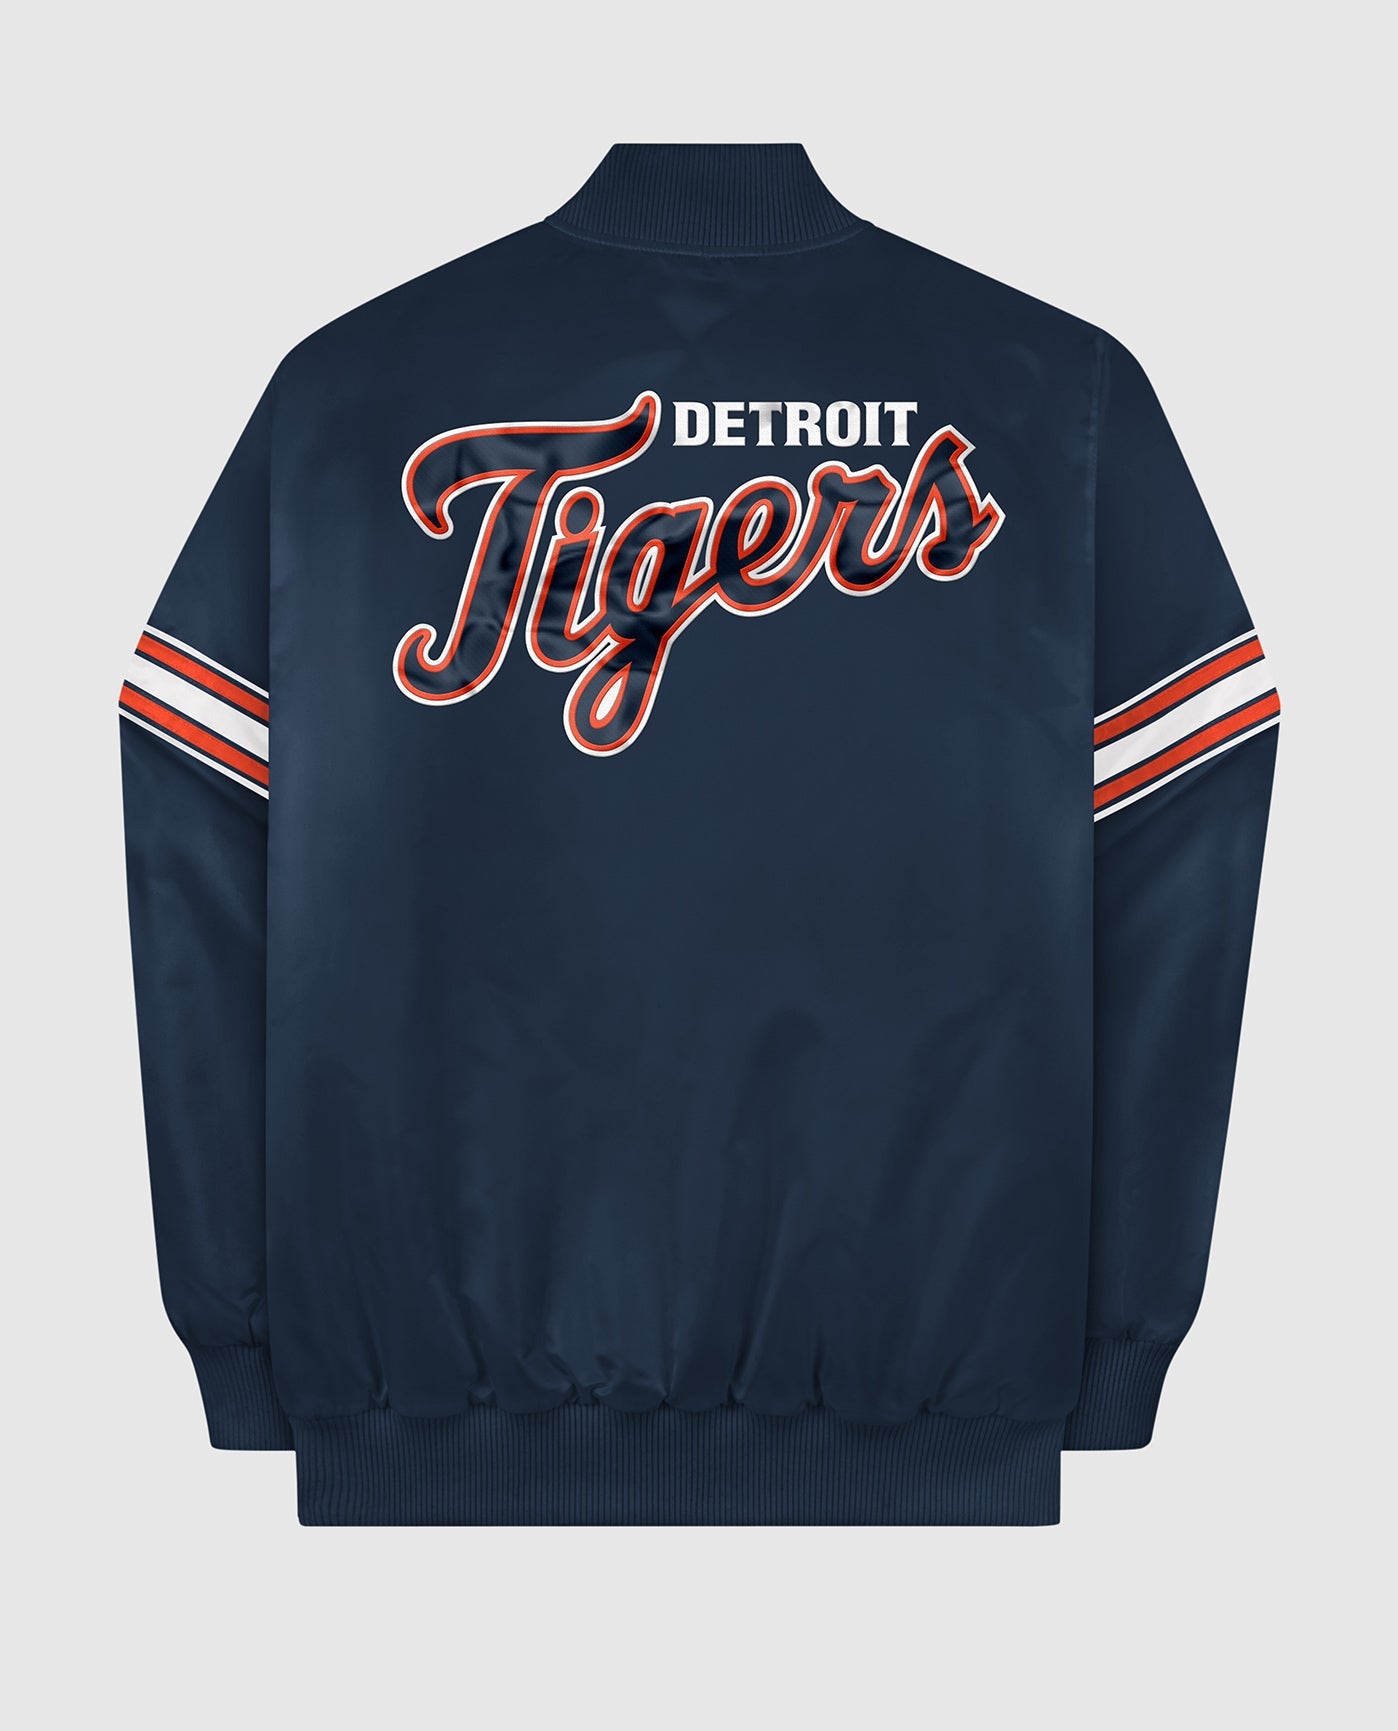 Starter Detroit Tigers Navy Holiday Jacket Size: 2XL